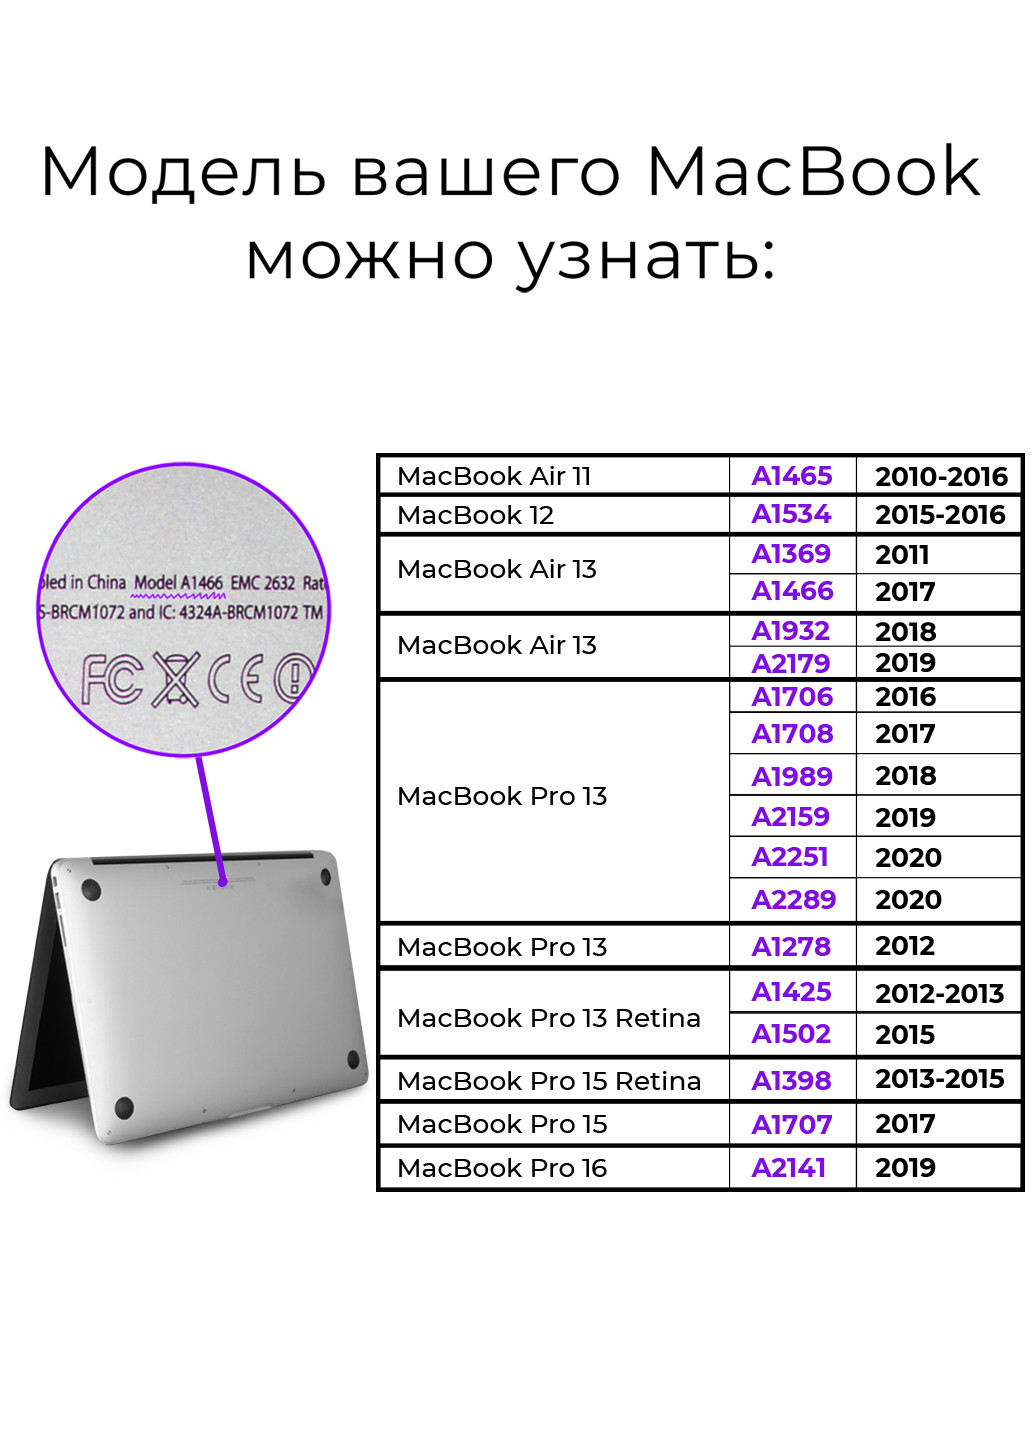 Чехол пластиковый для Apple MacBook 12 A1534 / A1931 Дедпул (Deadpool) (3365-1567) MobiPrint (218347770)